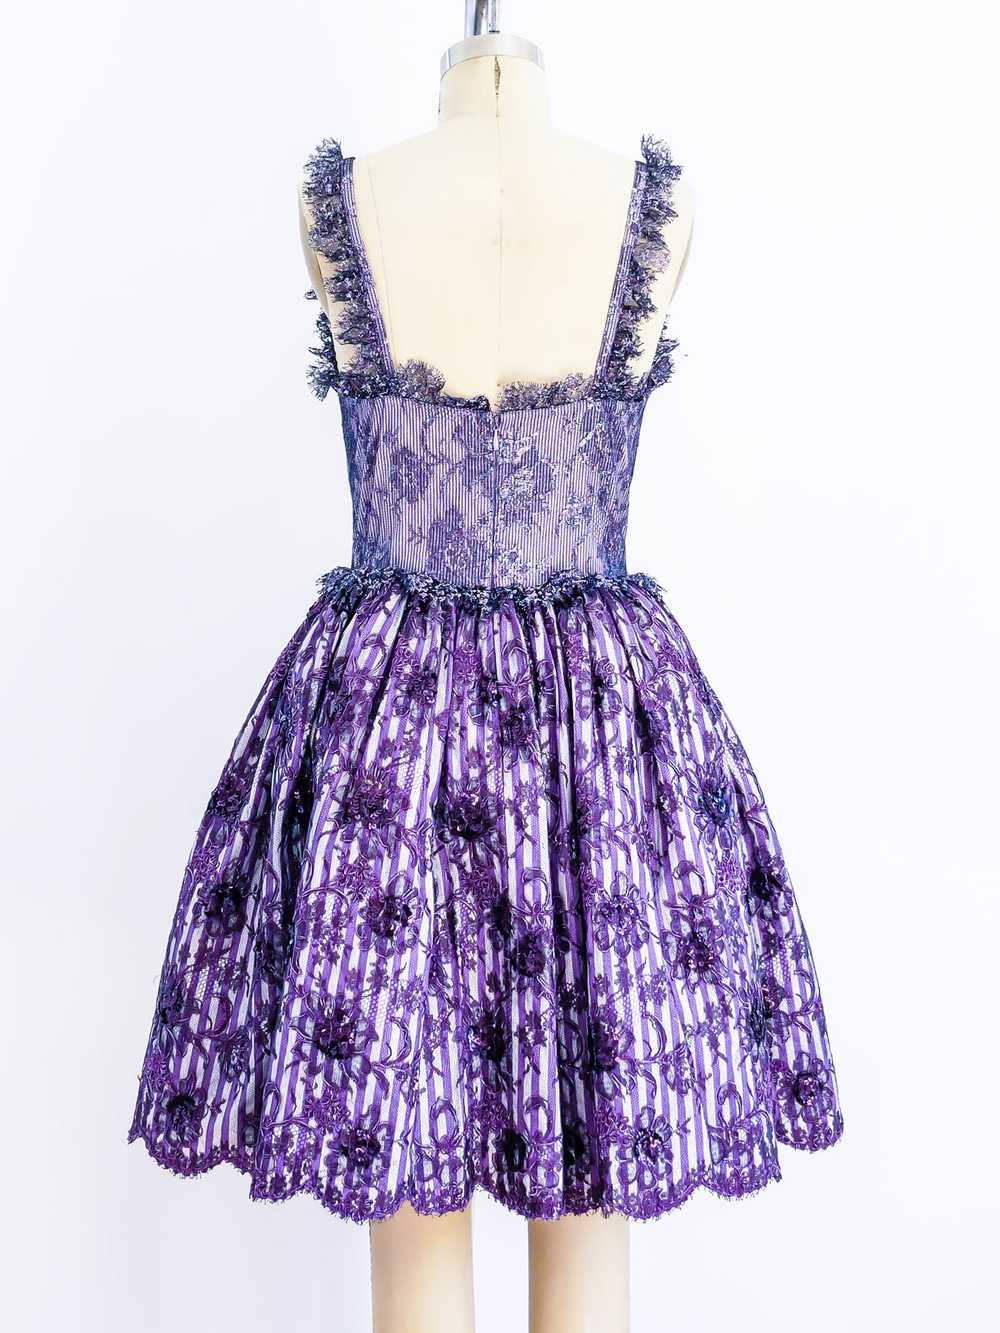 Geoffrey Beene Purple Lace Cocktail Dress - image 3